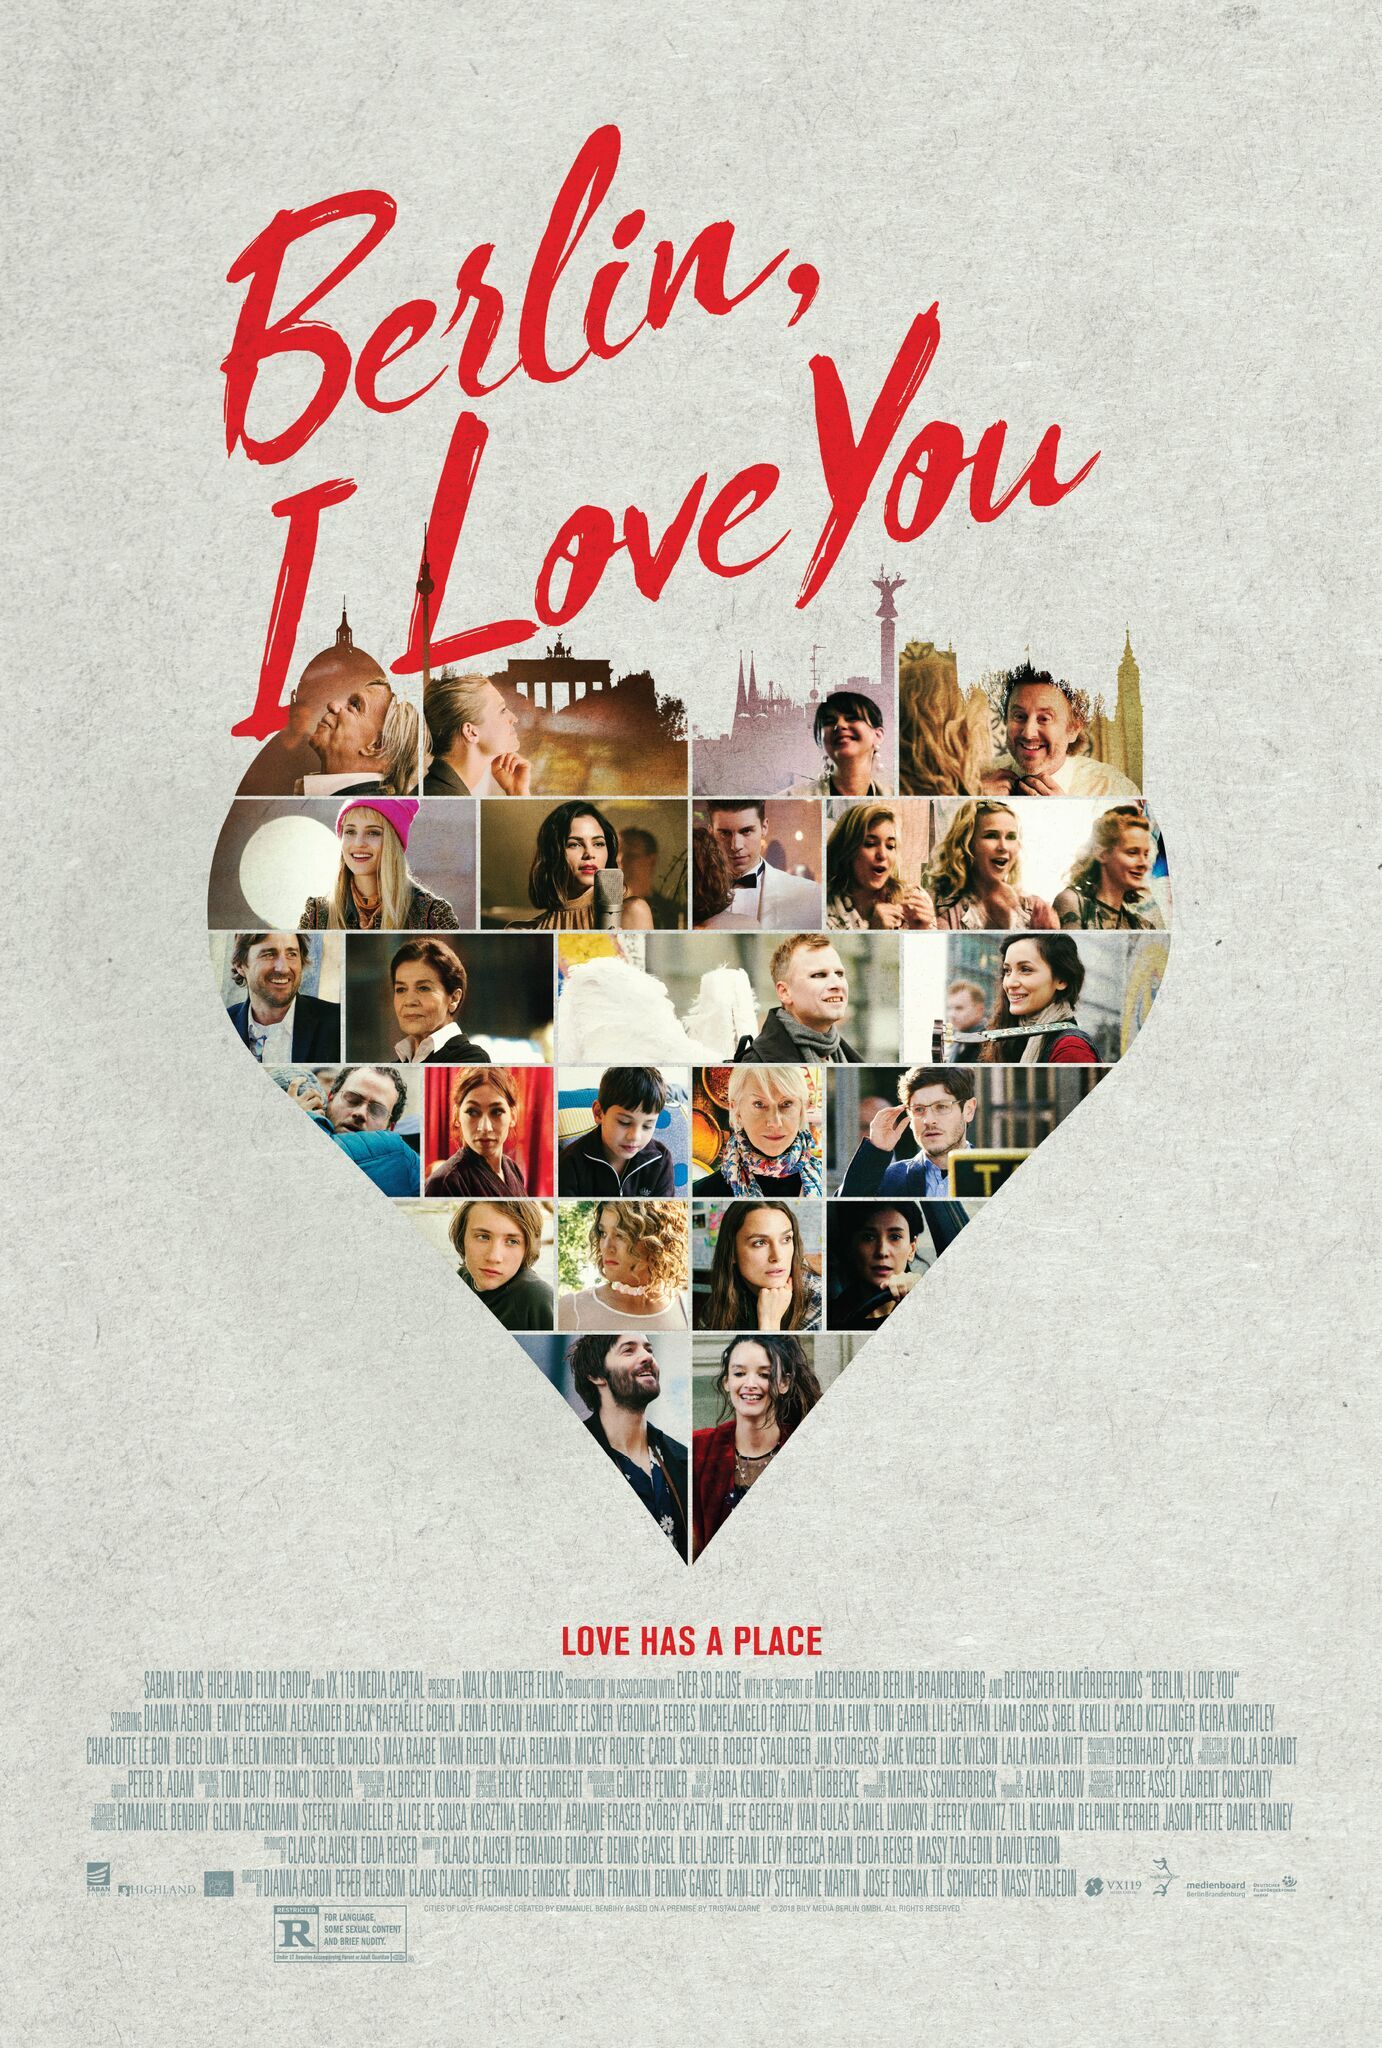 Nonton film Berlin I Love You layarkaca21 indoxx1 ganool online streaming terbaru